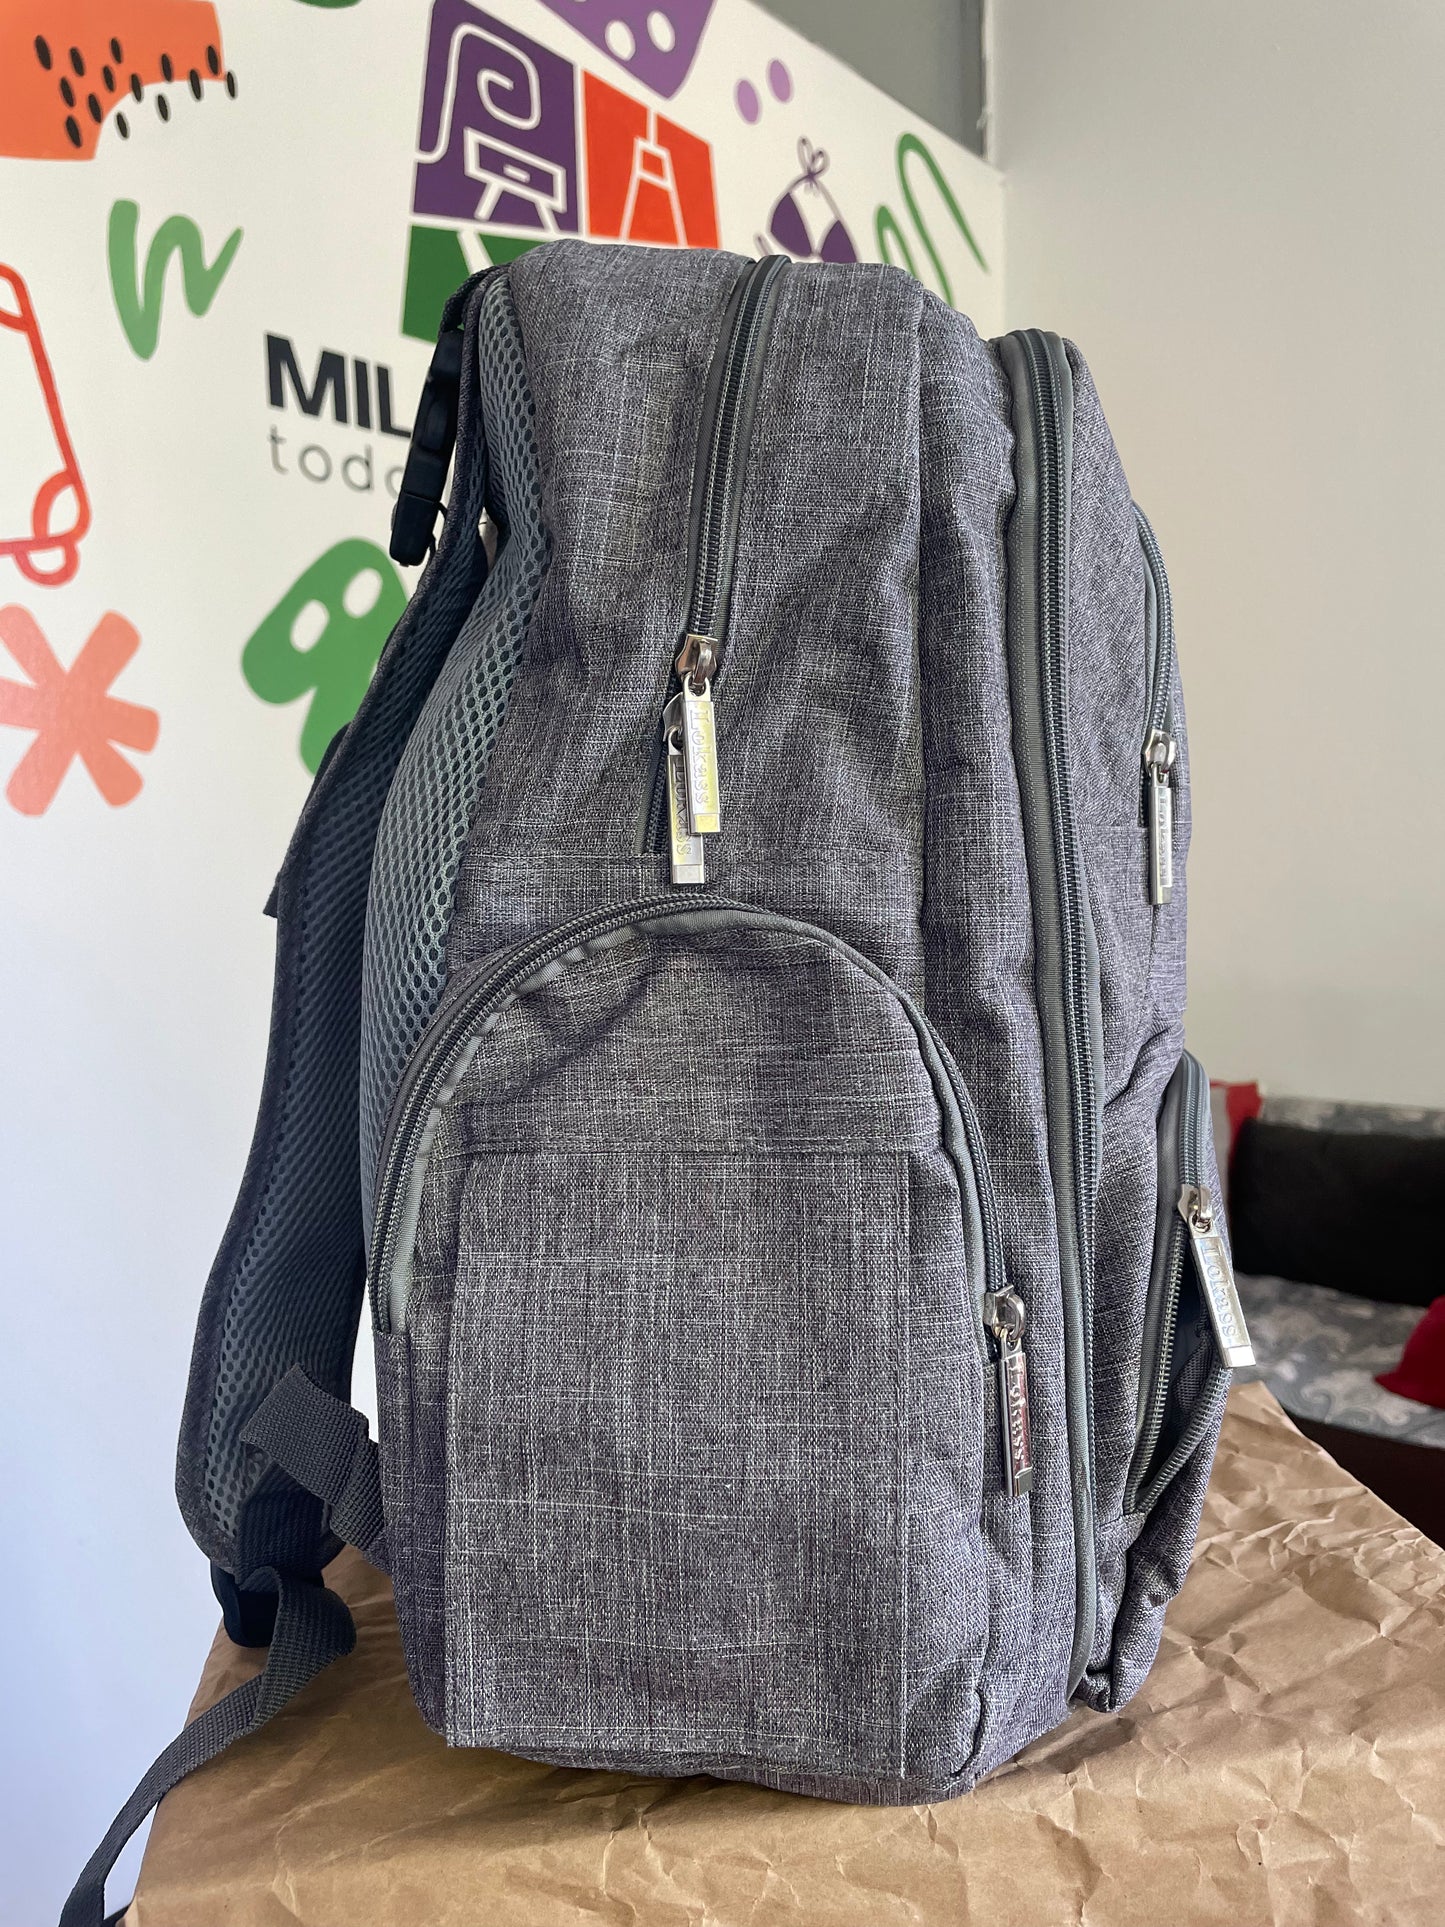 Pañalera tipo mochila 
Incluye aulado y bolsa con clip para pacha , compartimos laterales tipo lonchera para mantener caliente o fria